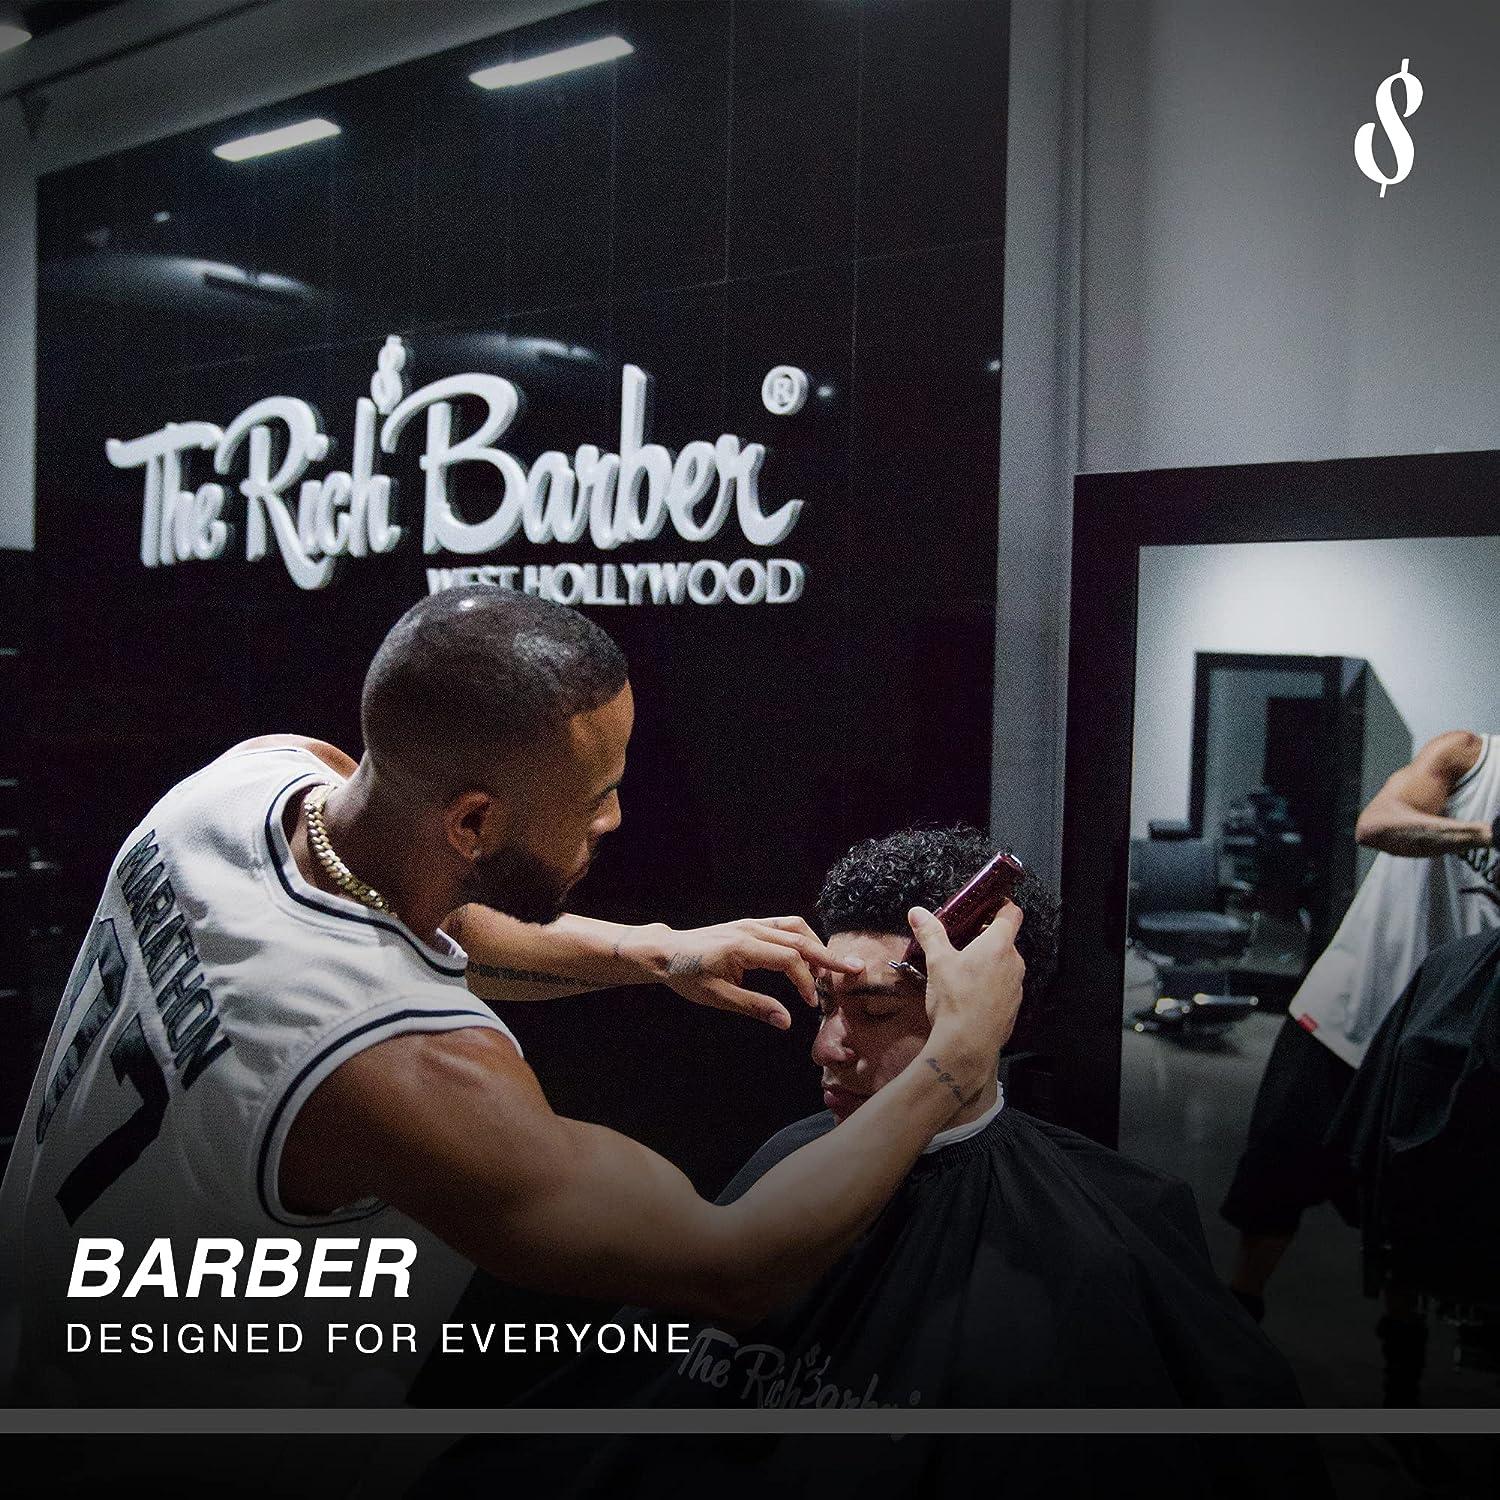  The Rich Barber N'Hance Pro Barber Kit I - Professional 3-in-1  Hair & Beard Styling Set - Keratin-Infused Hair Building Fibers, Applicator  Pump, Application Card - Hairline Enhancer & Volumizing Spray 